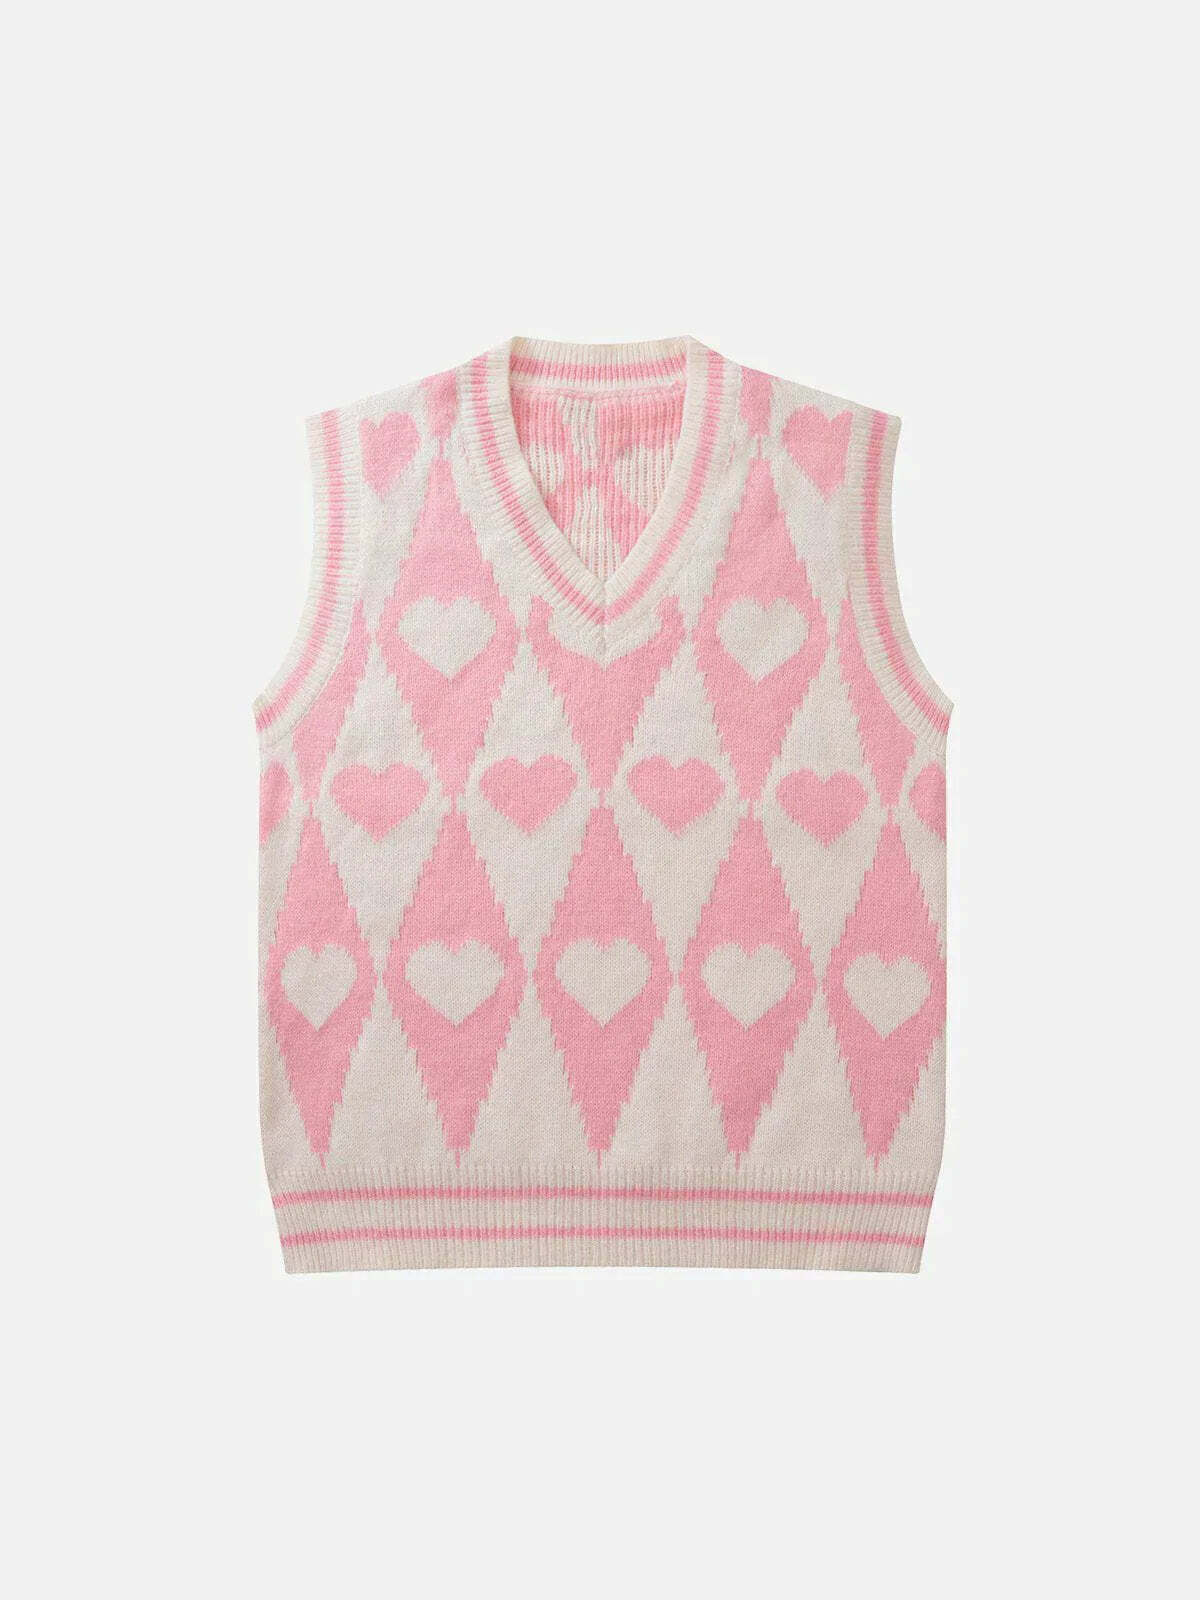 plaid love sweater vest retro quirky y2k style 7032